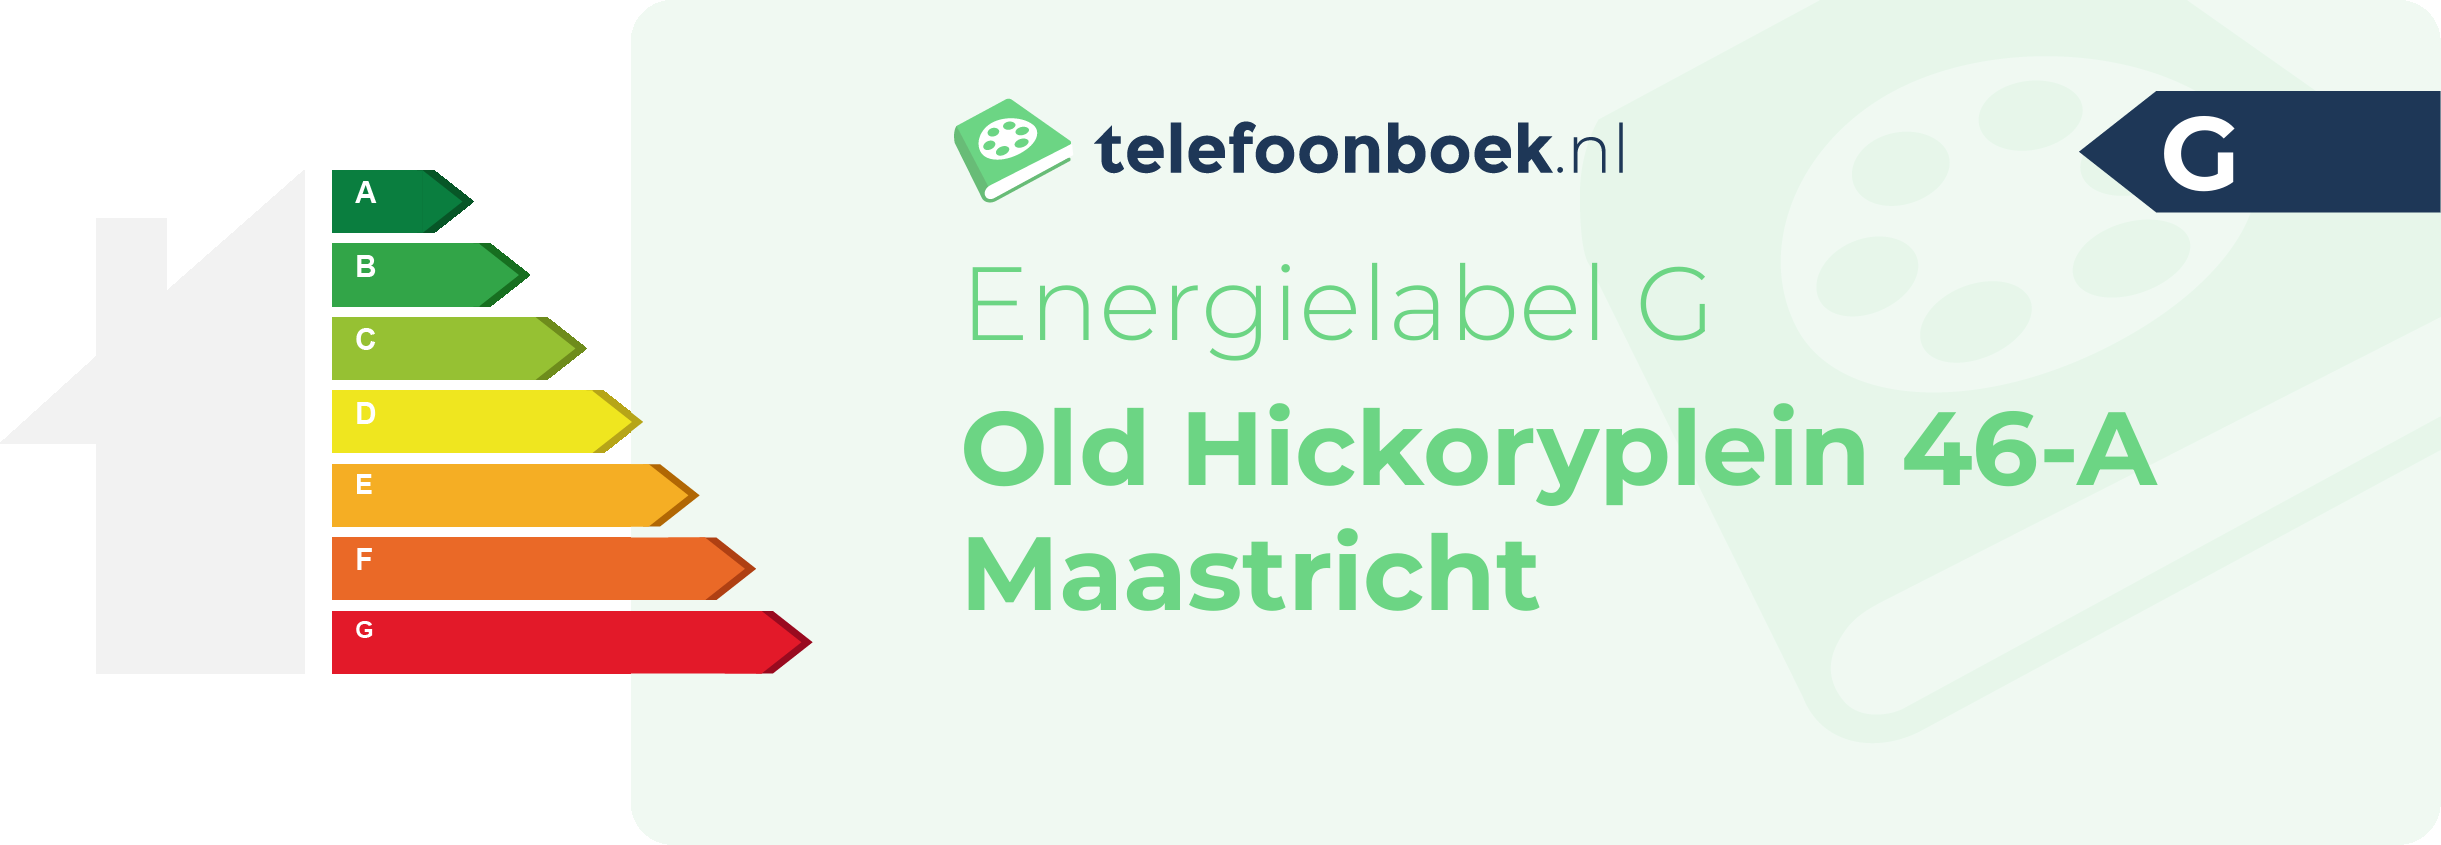 Energielabel Old Hickoryplein 46-A Maastricht